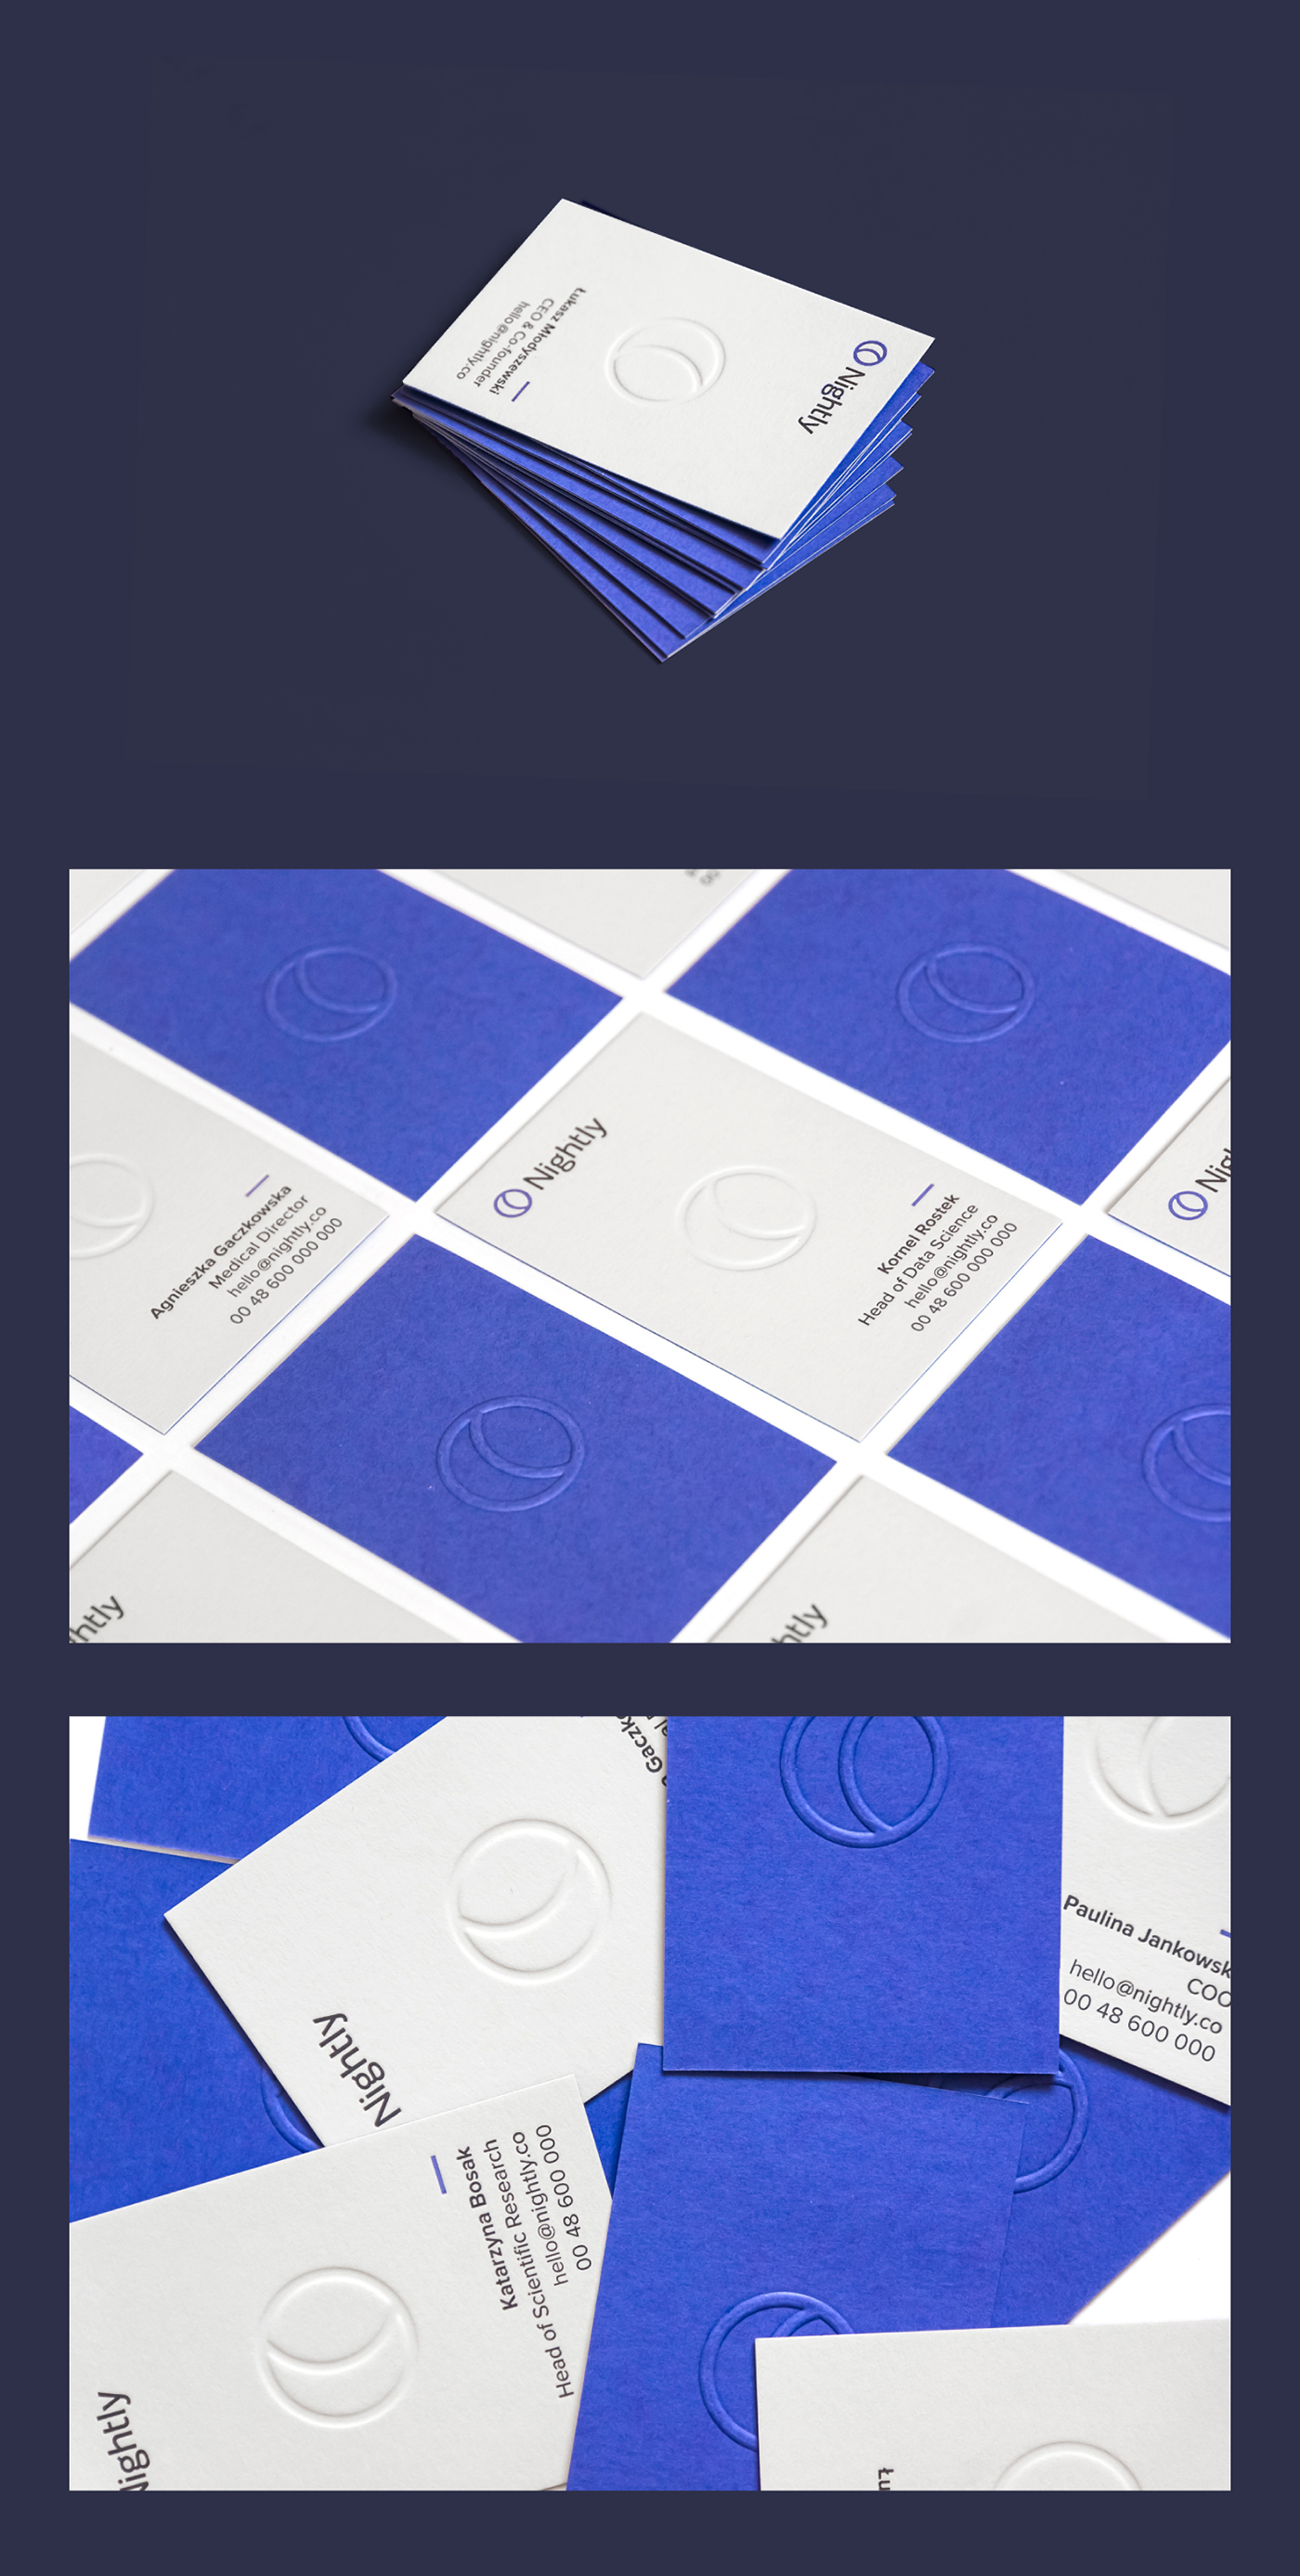 brand sleep sleep app app branding branding  blue Business Cards pillow logo adobeawards